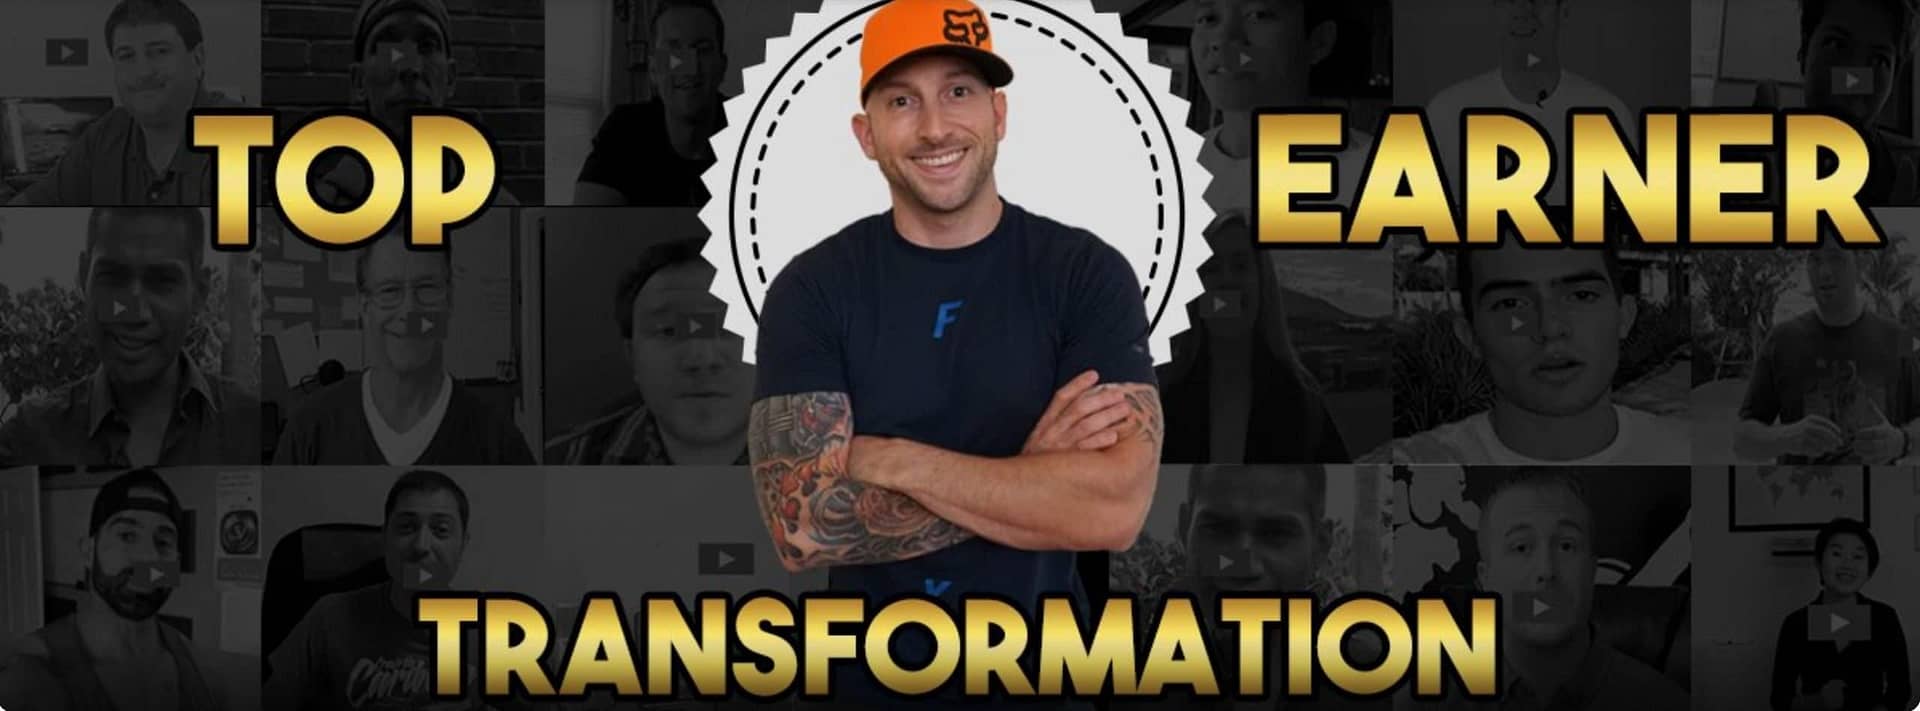 Top Earner Transformation